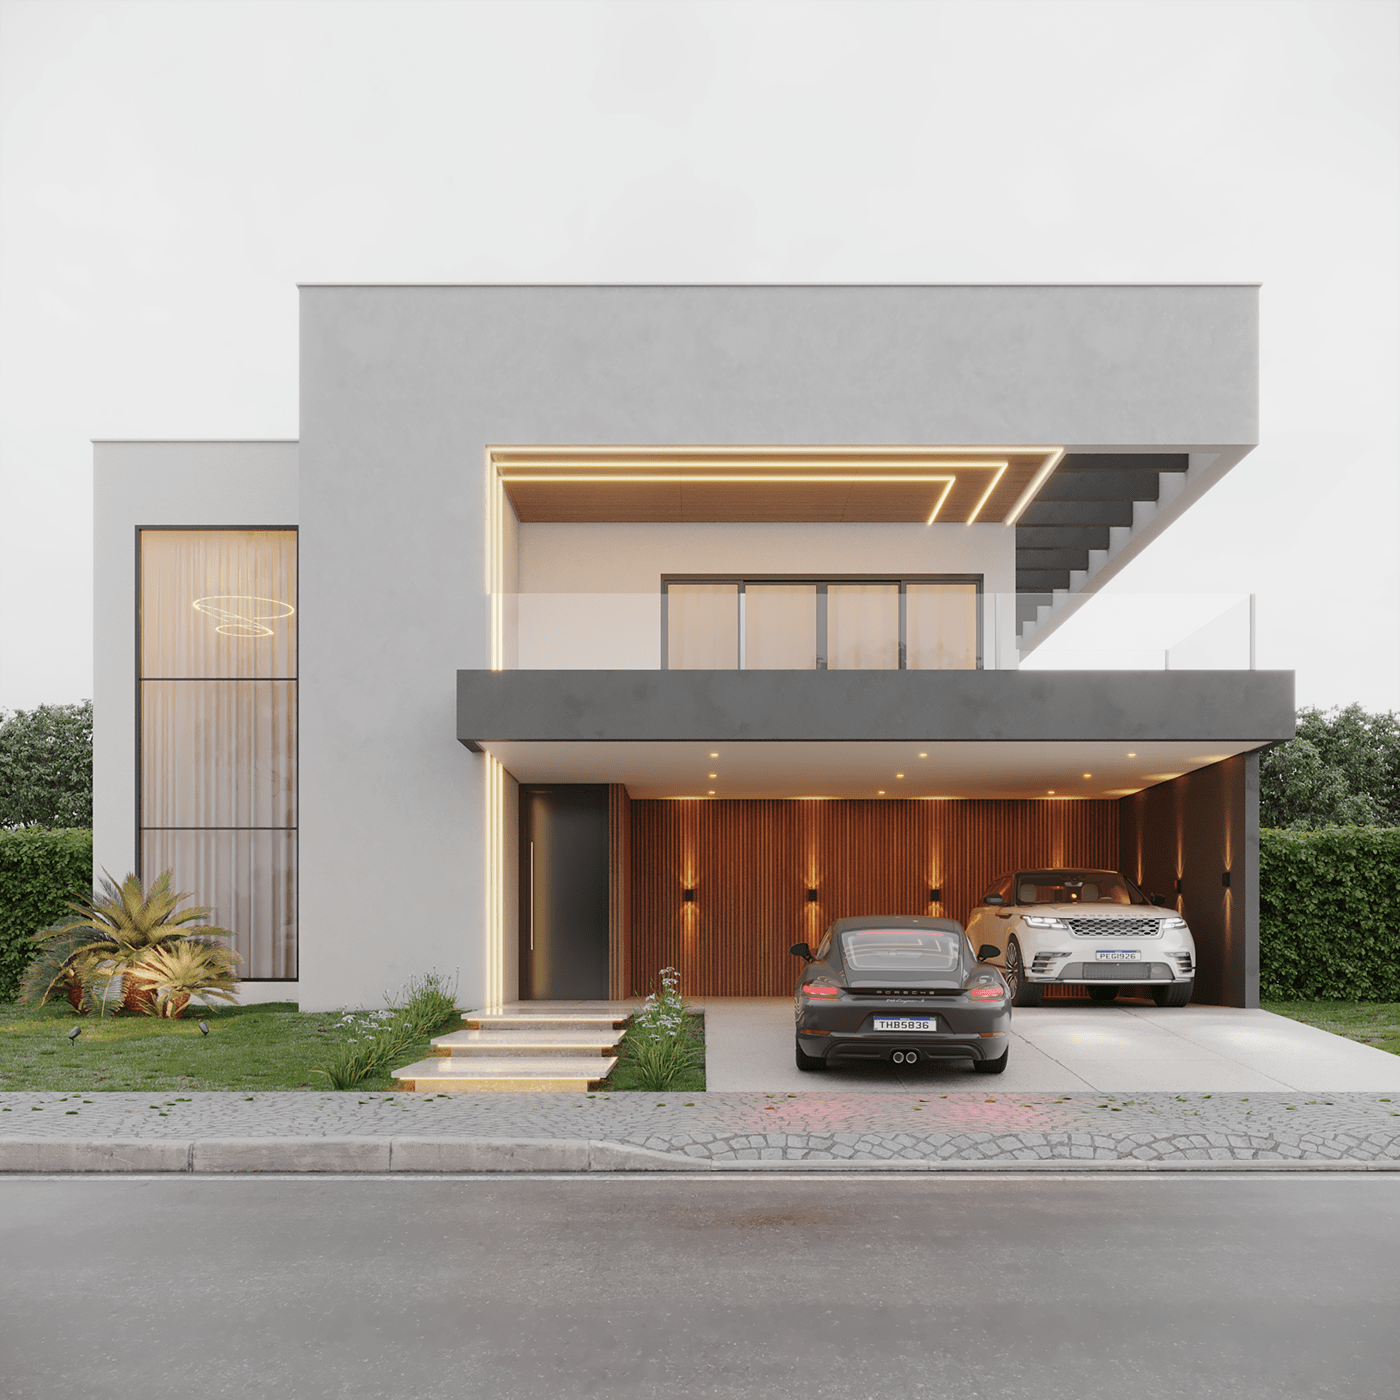 architecture 3ds max corona Render visualization modern facade exterior house archiz